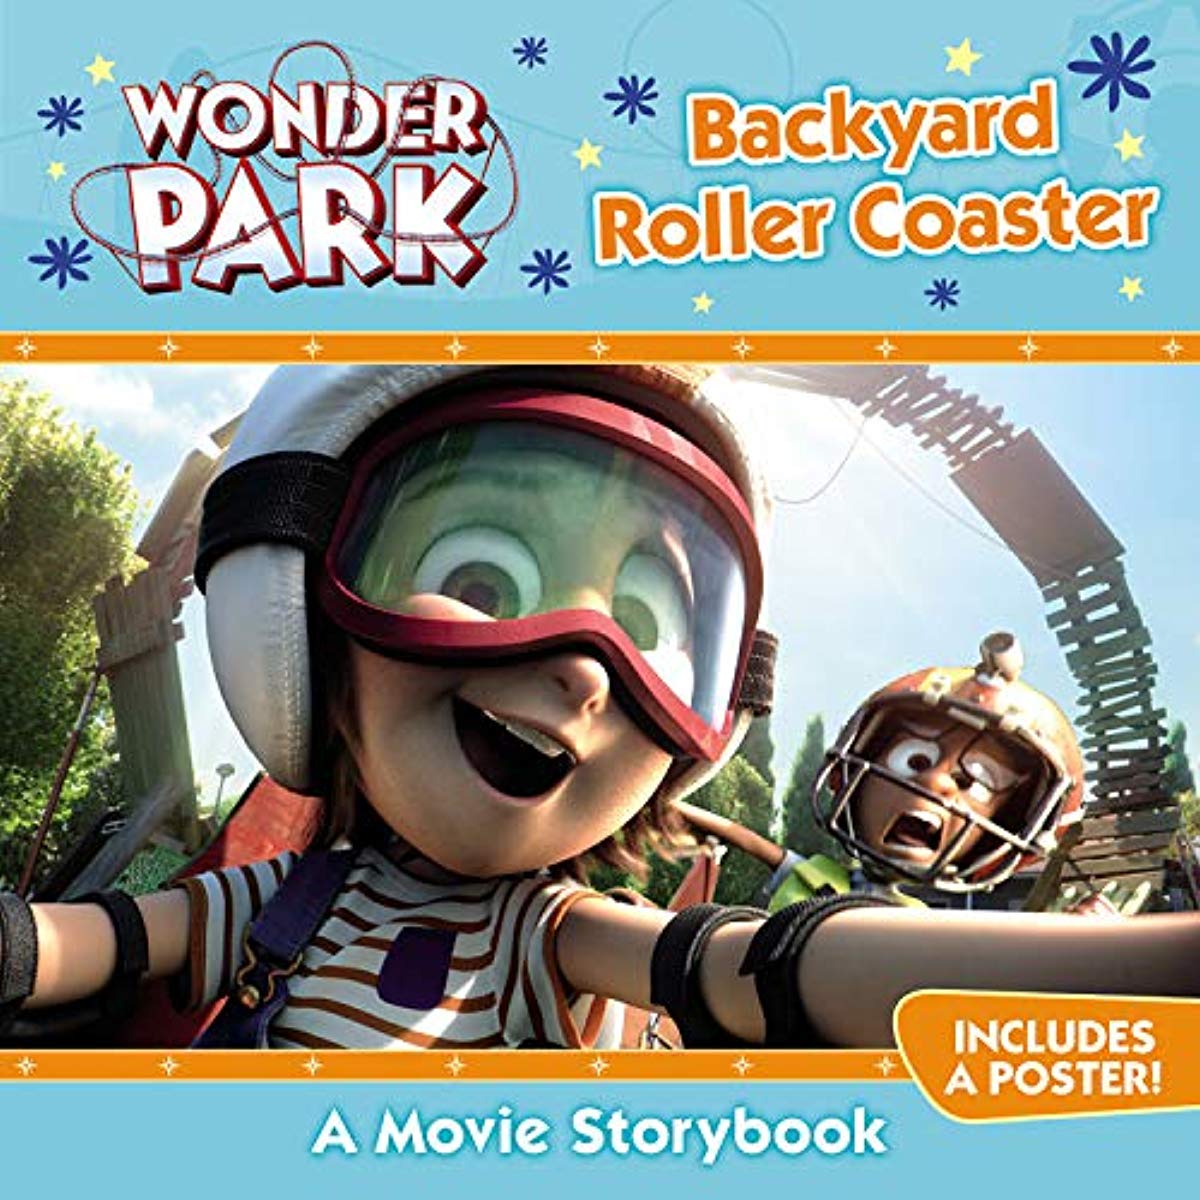 Wonder Park: Backyard Roller Coaster